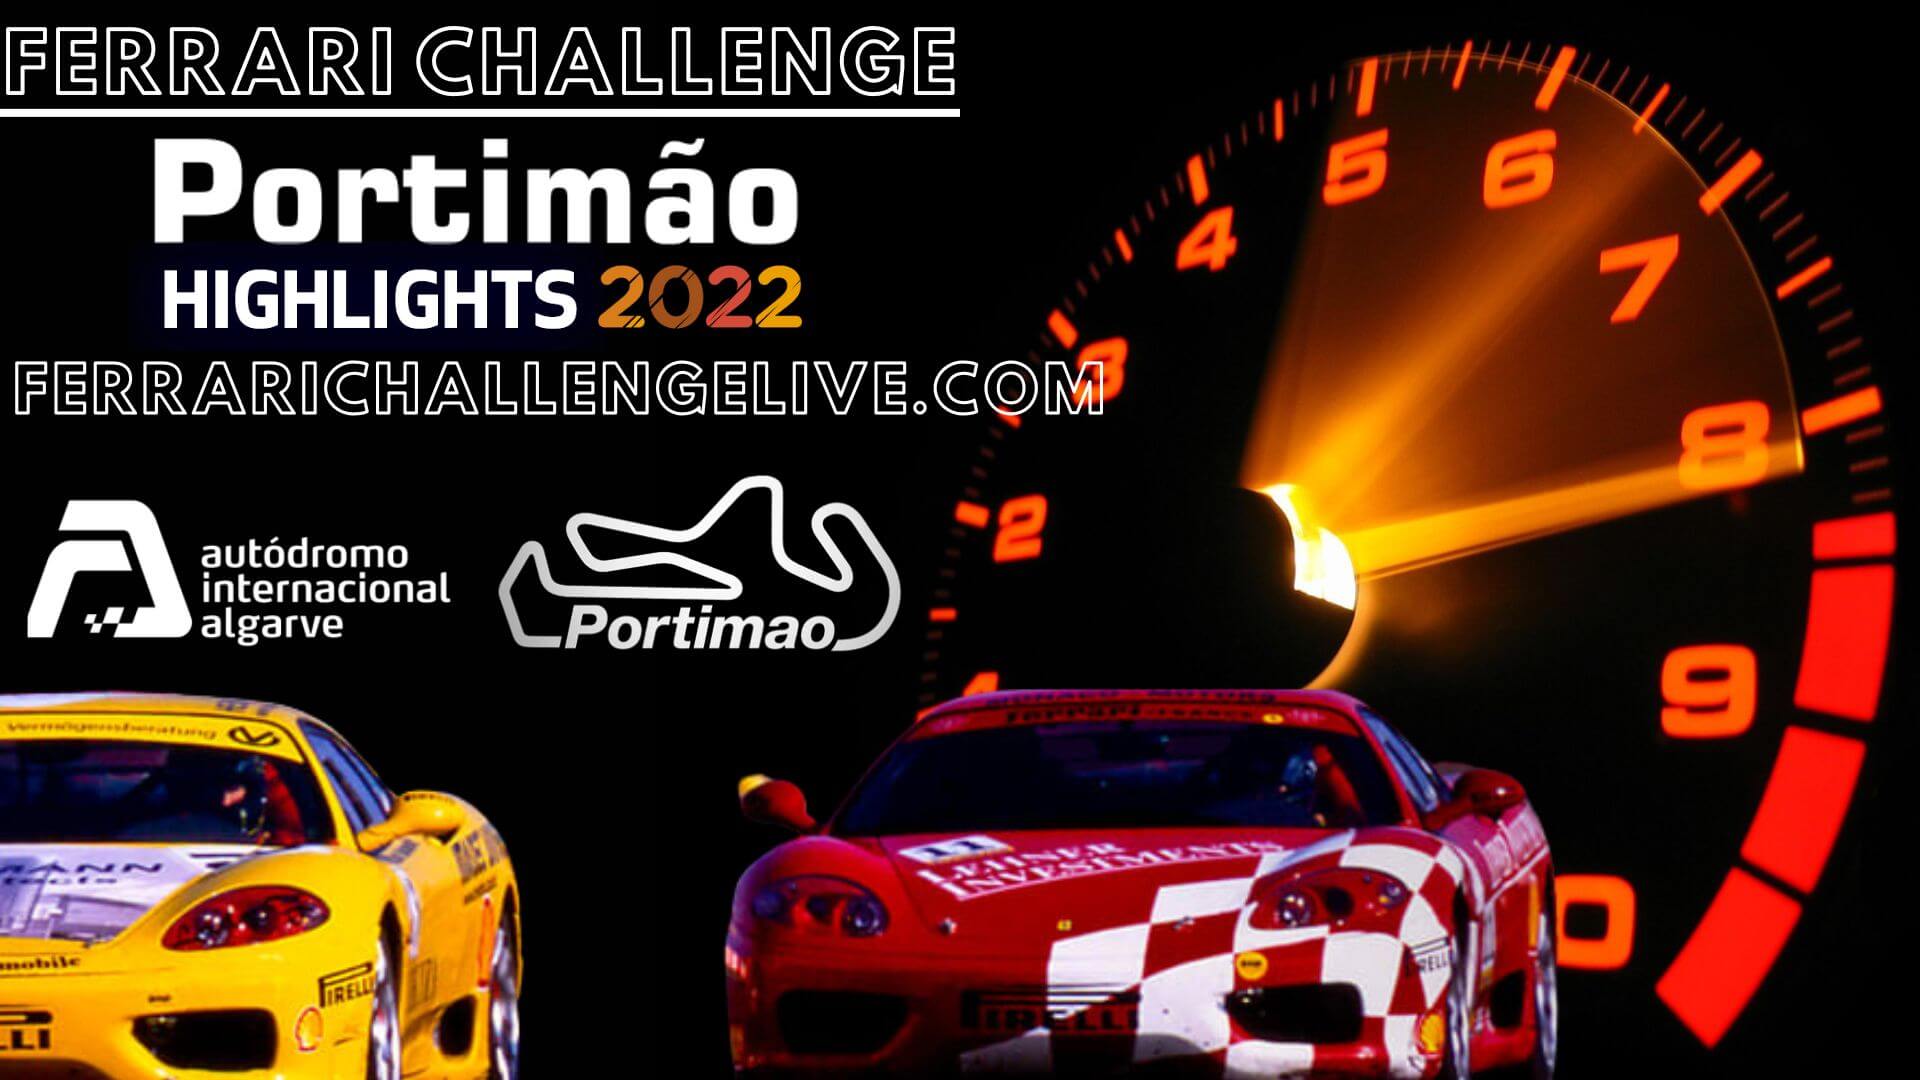 Portimao Ferrari Challenge Europe Highlights 2022